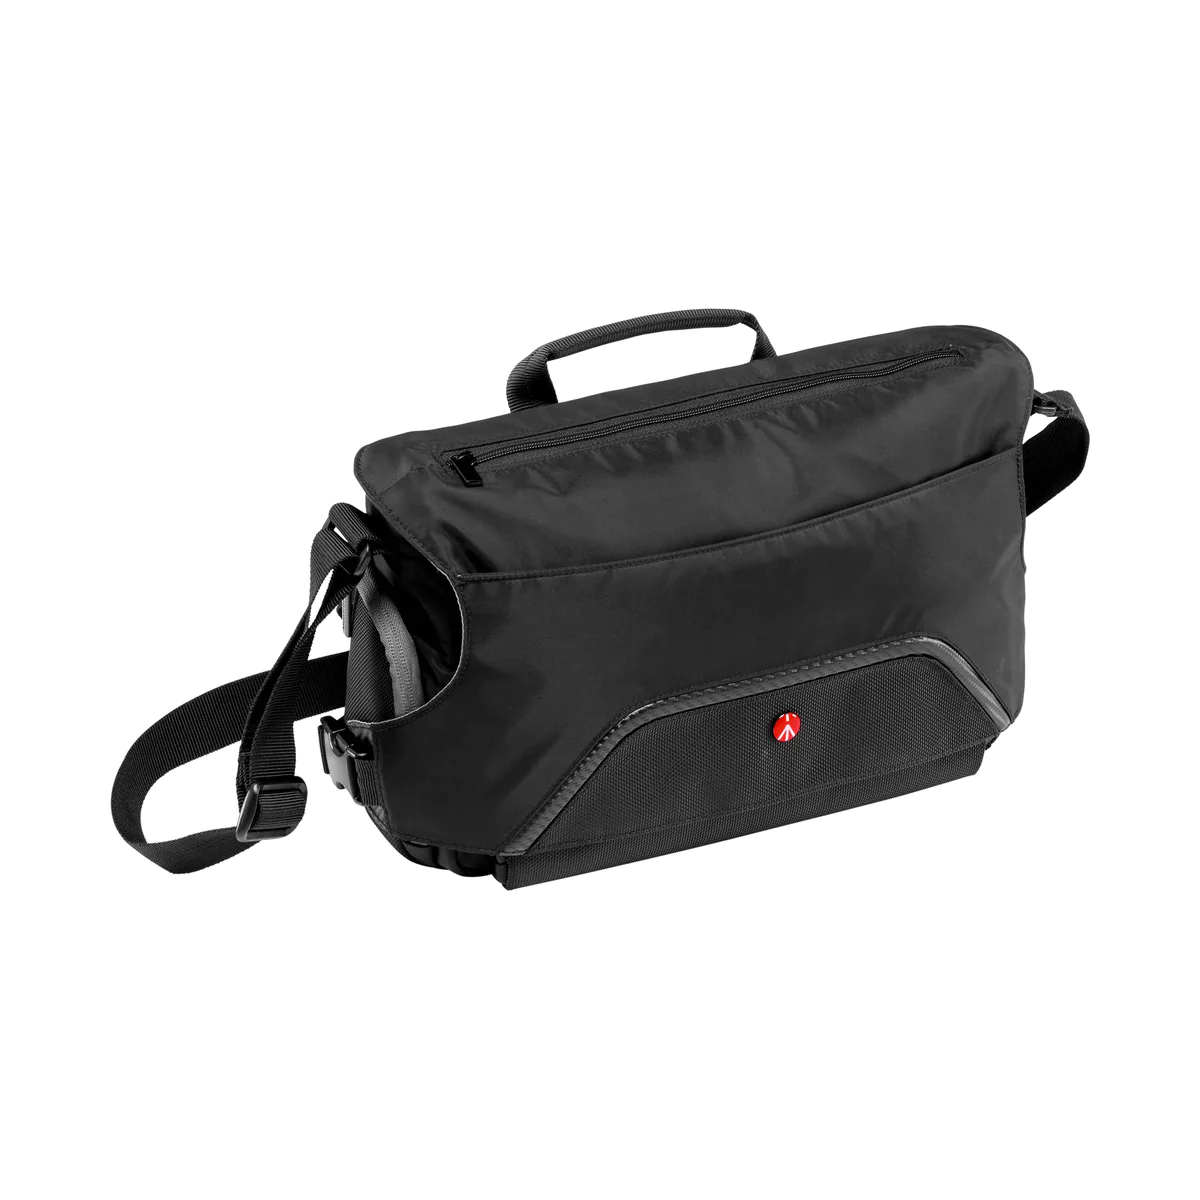 Manfrotto Small Advanced Pixi Messenger Bag - Black